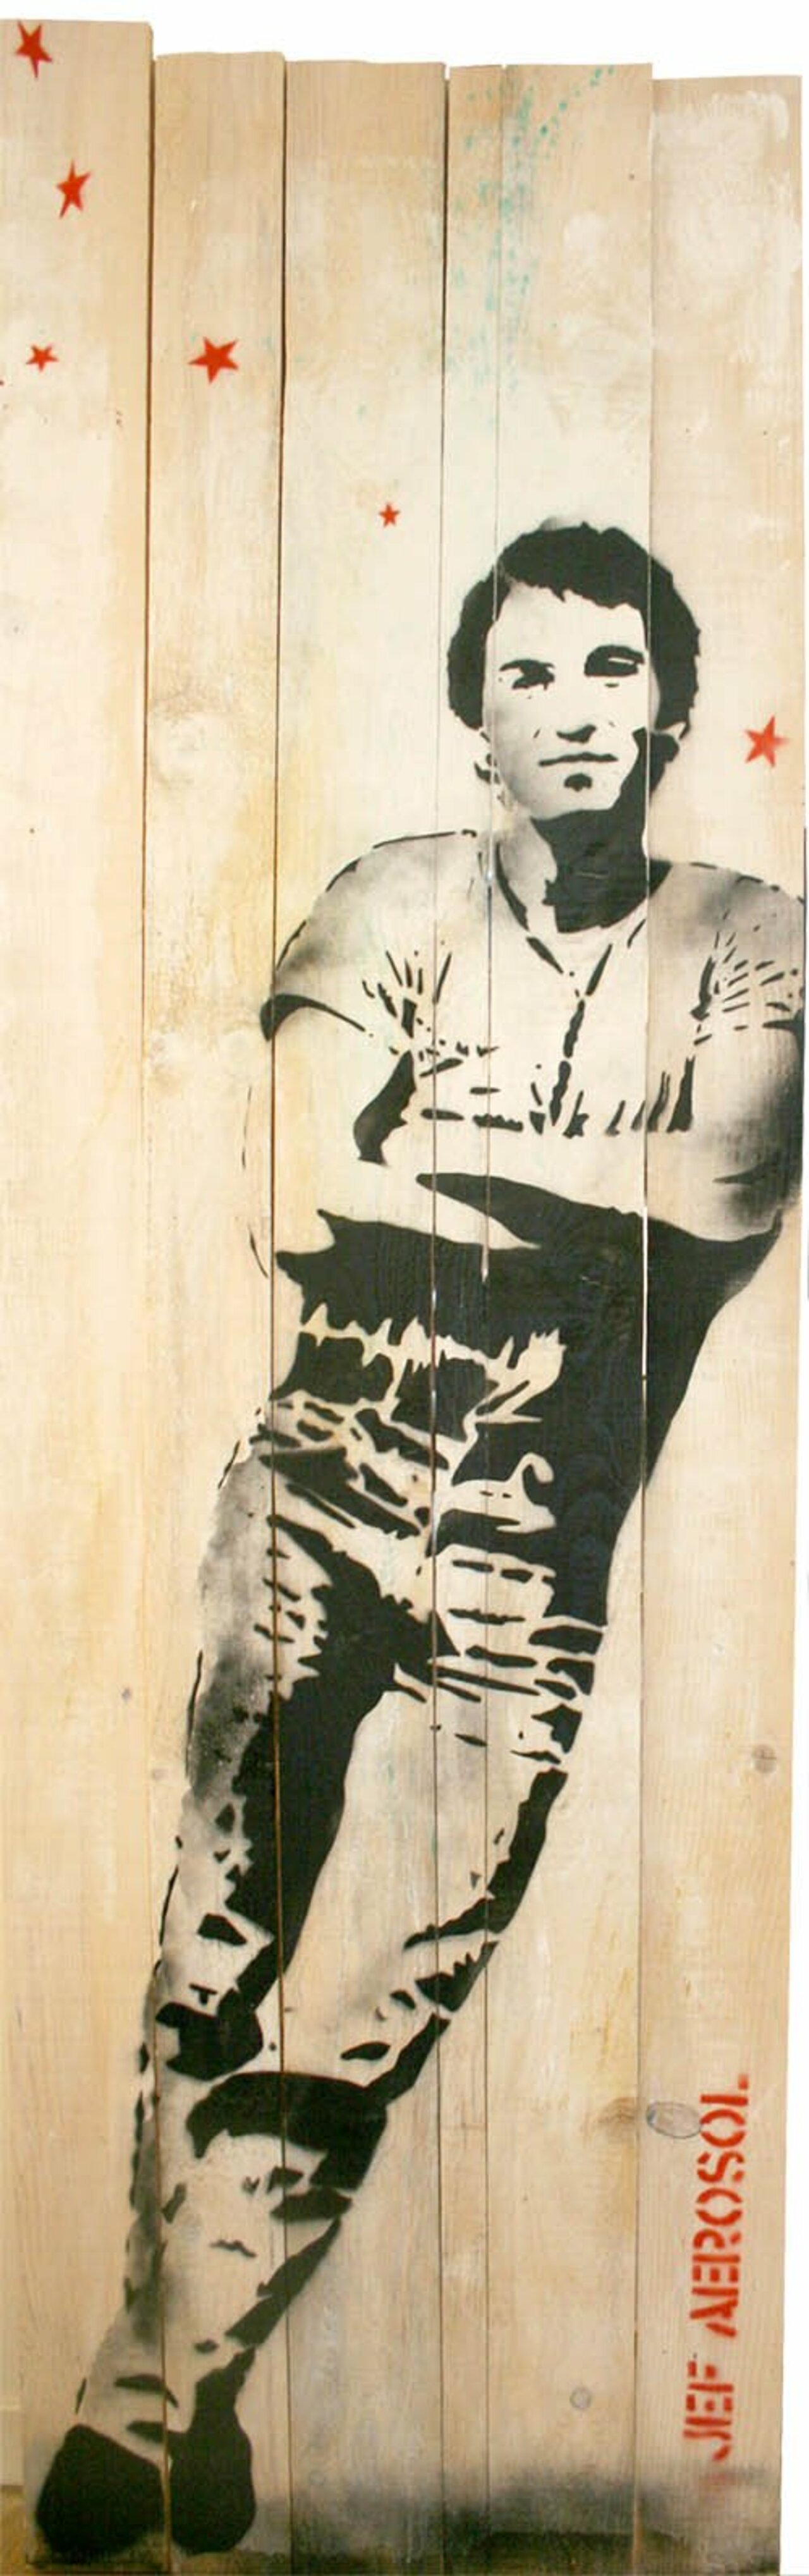 RT @Brindille_: #Streetart #urbanart #graffiti #pochoir sur palissade "Bruce Springsteen", 2012 de l'artiste français Jef Aérosol. https://t.co/pc2Q7XmhnB